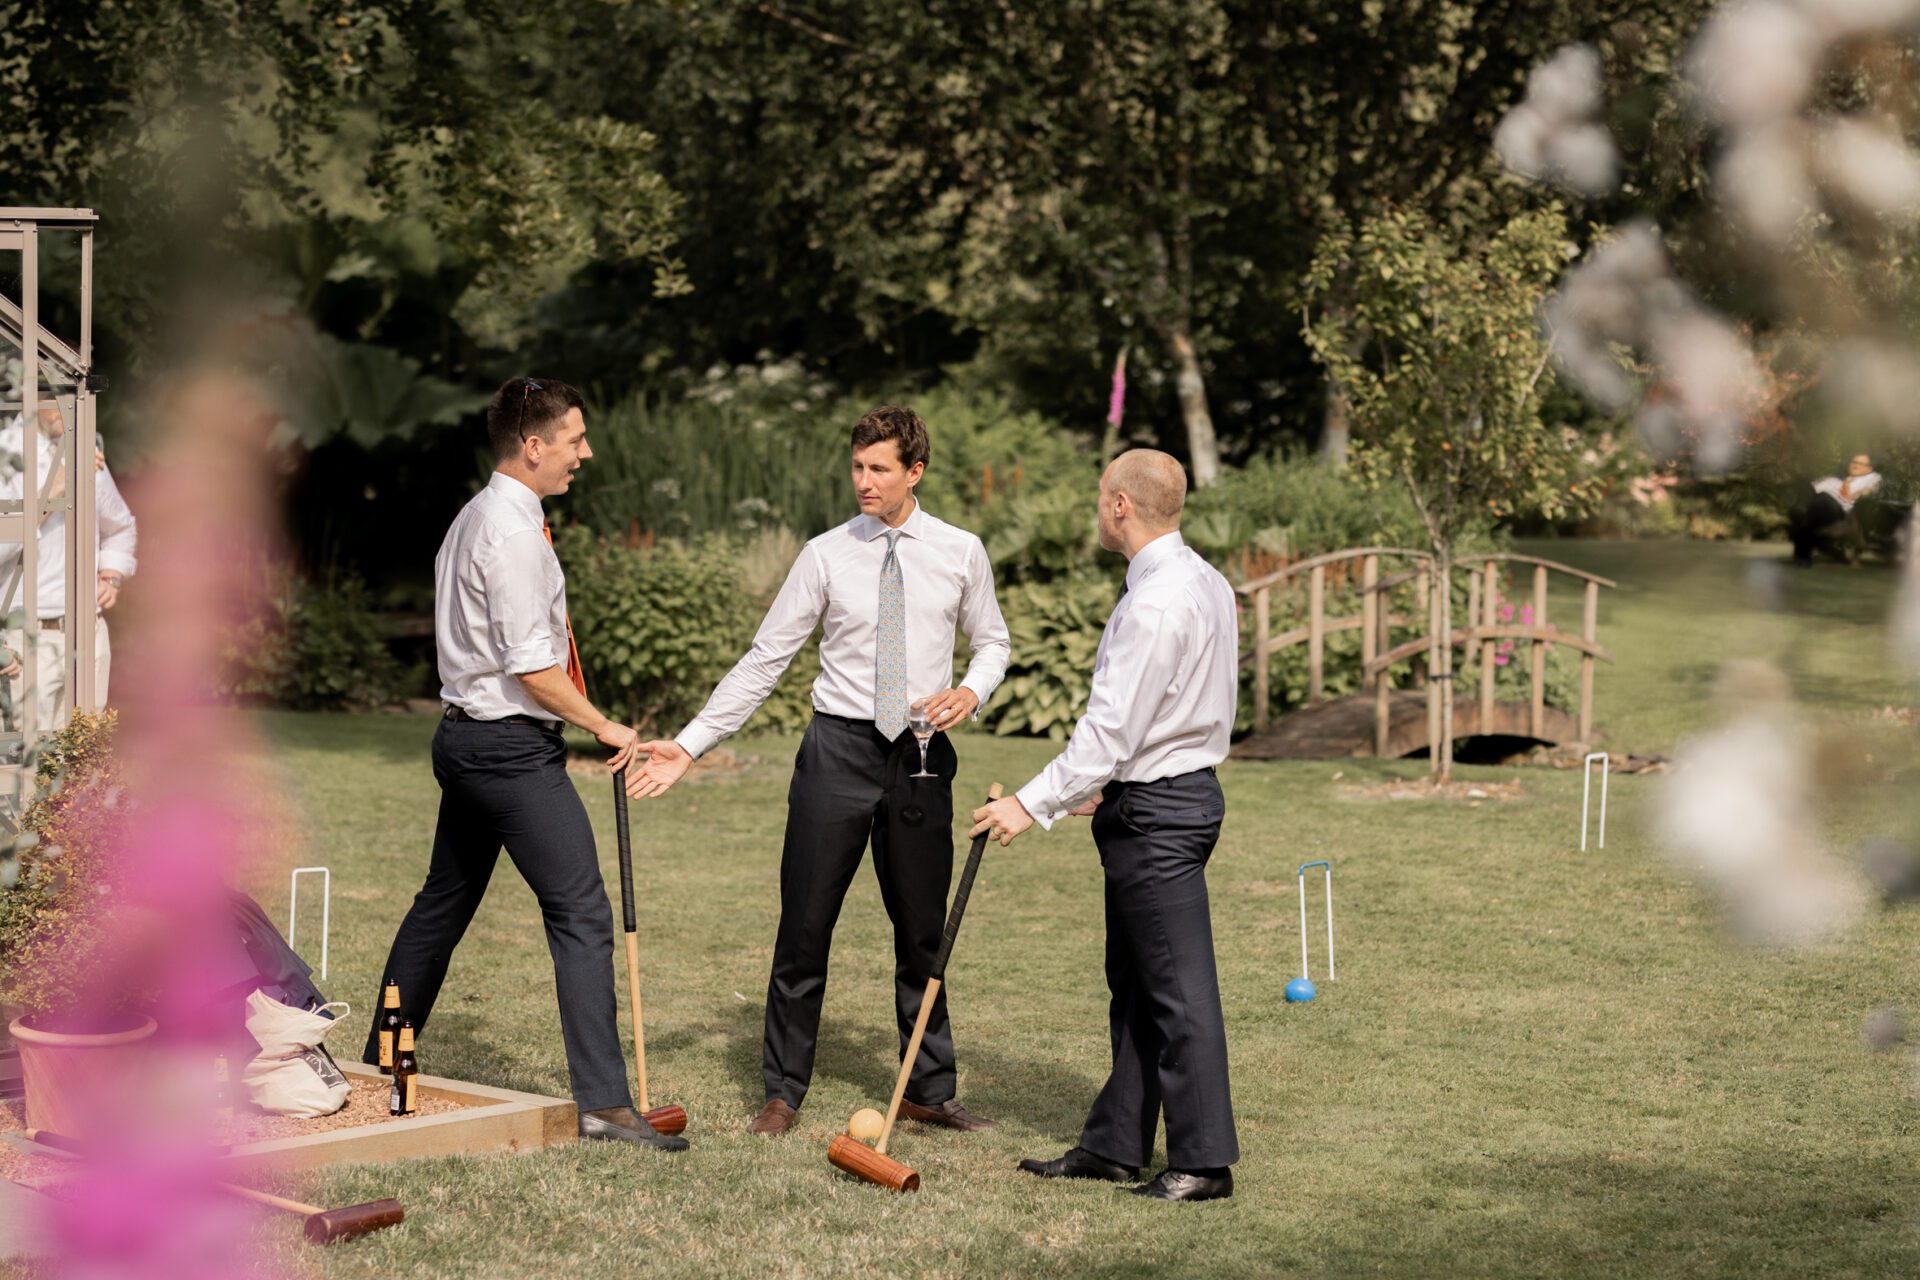 Wedding guests enjoy a game of croquet